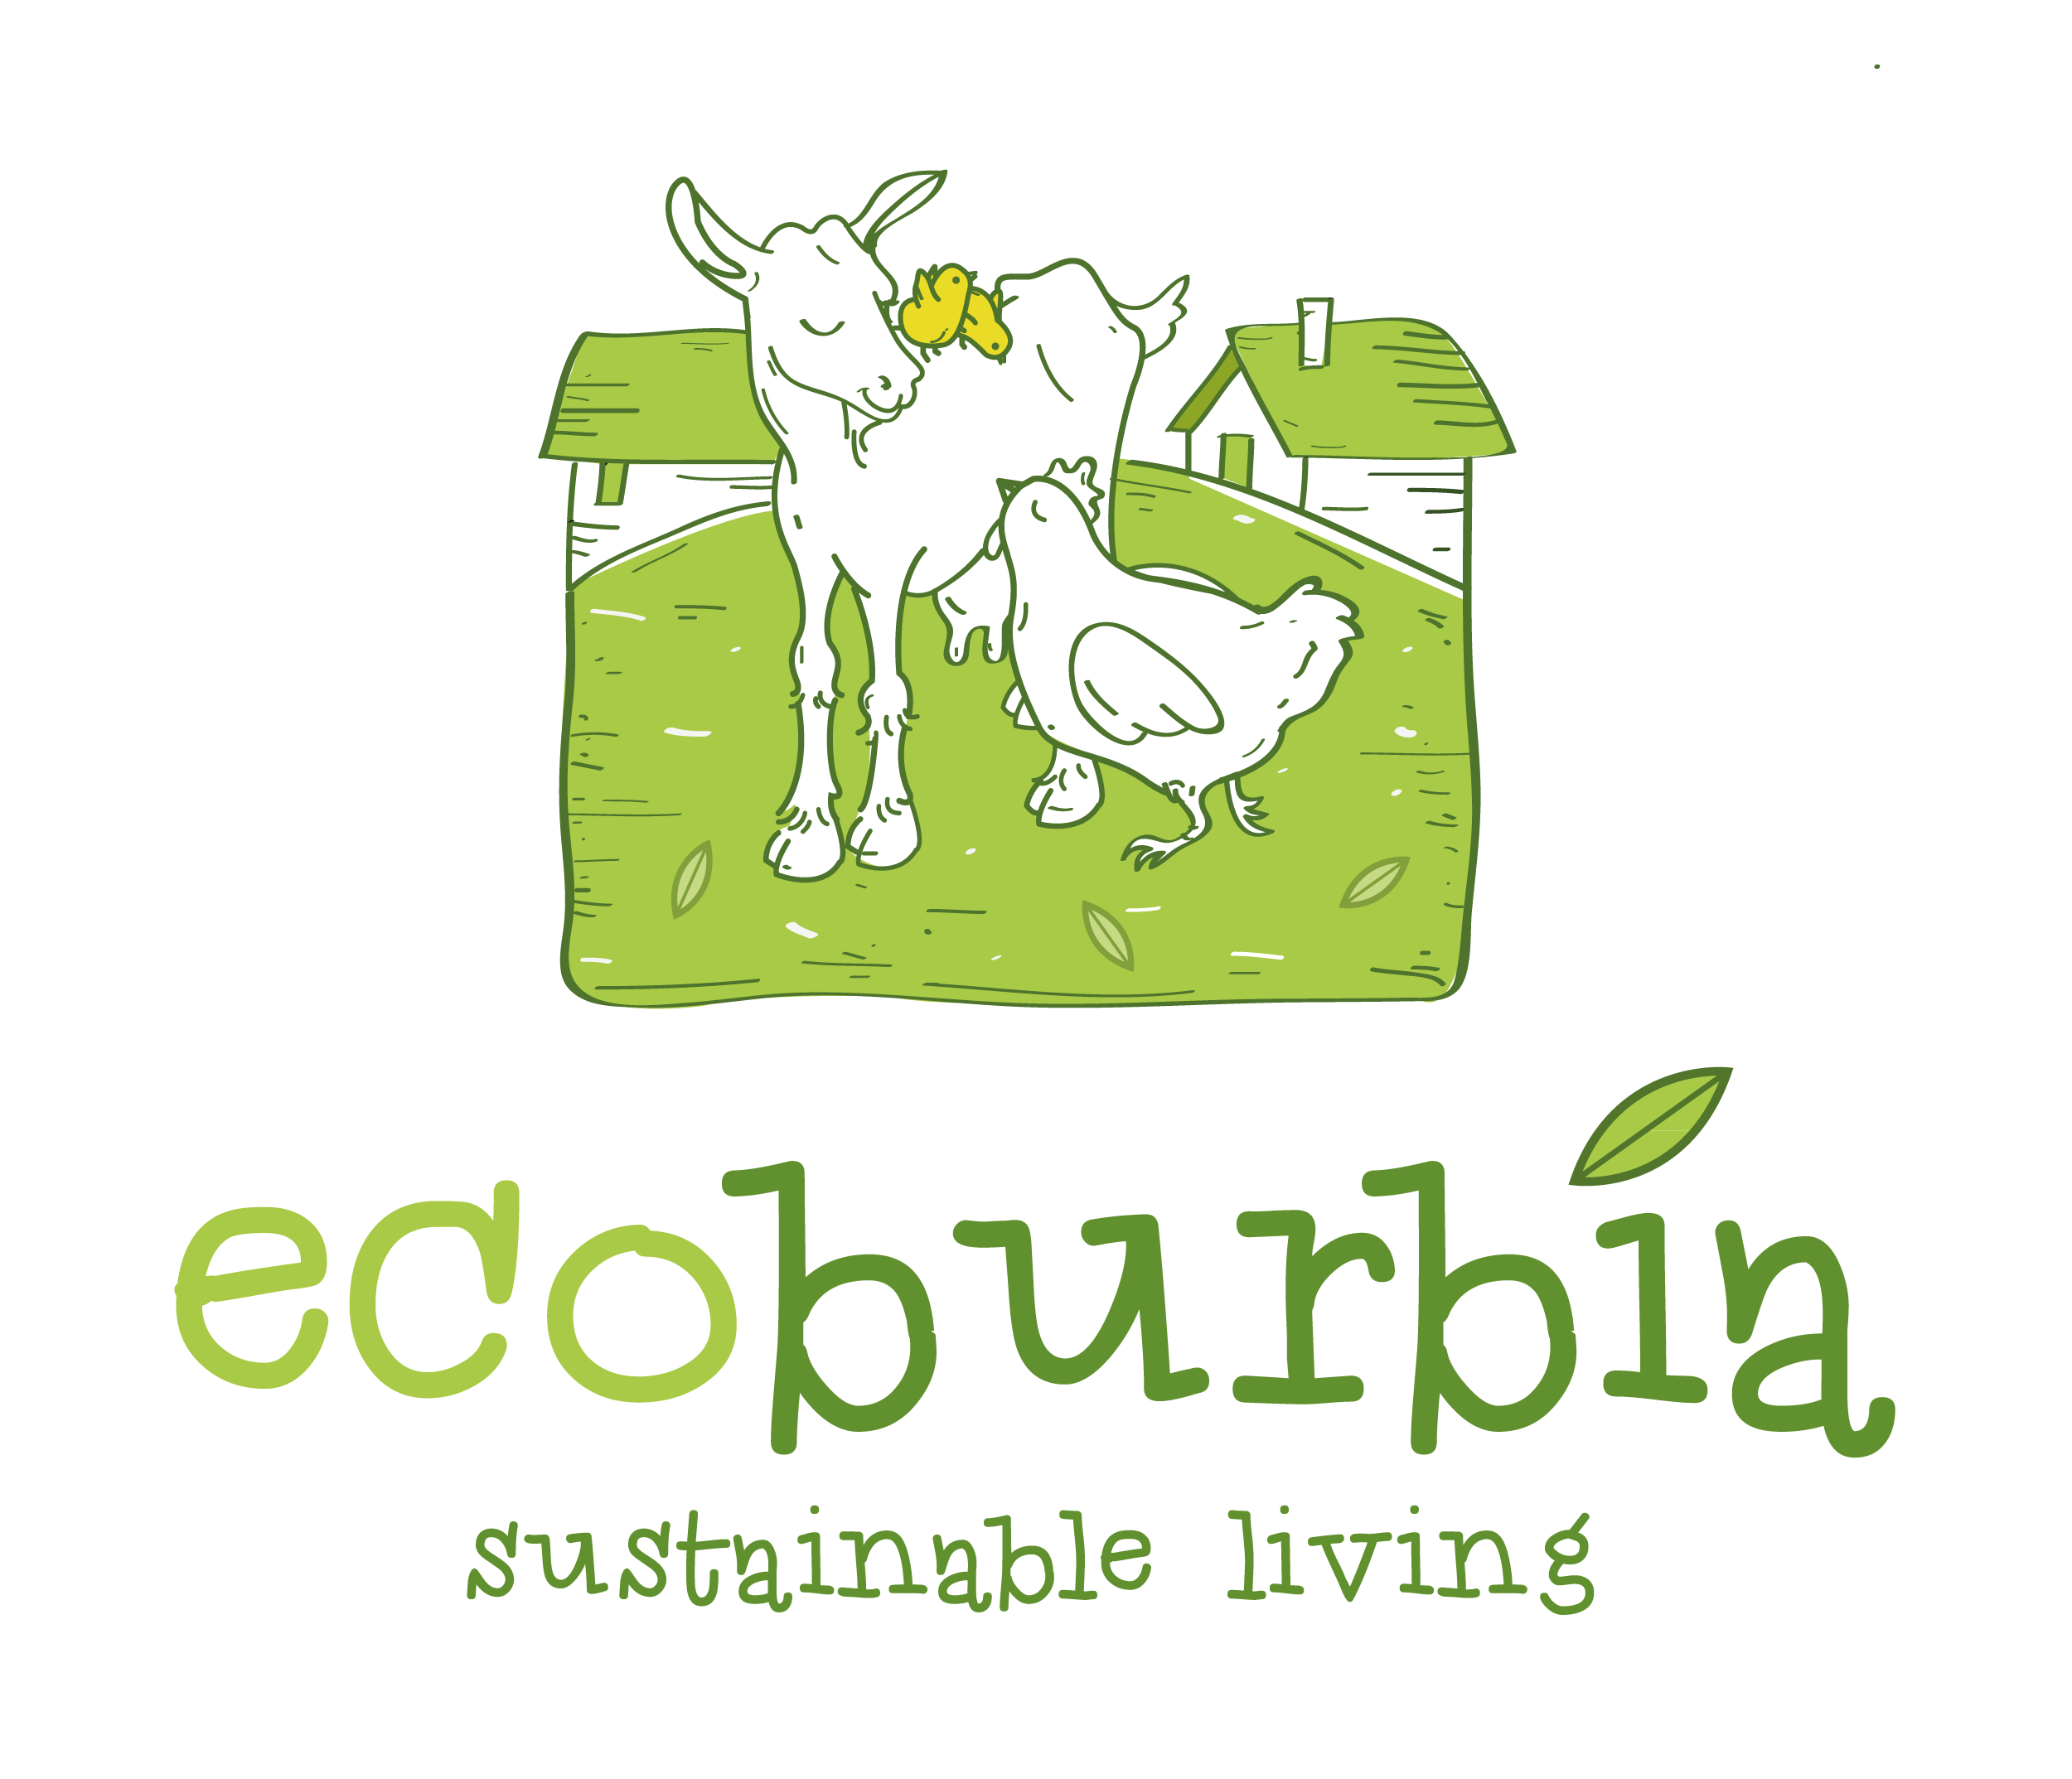 Ecoburburbia logo